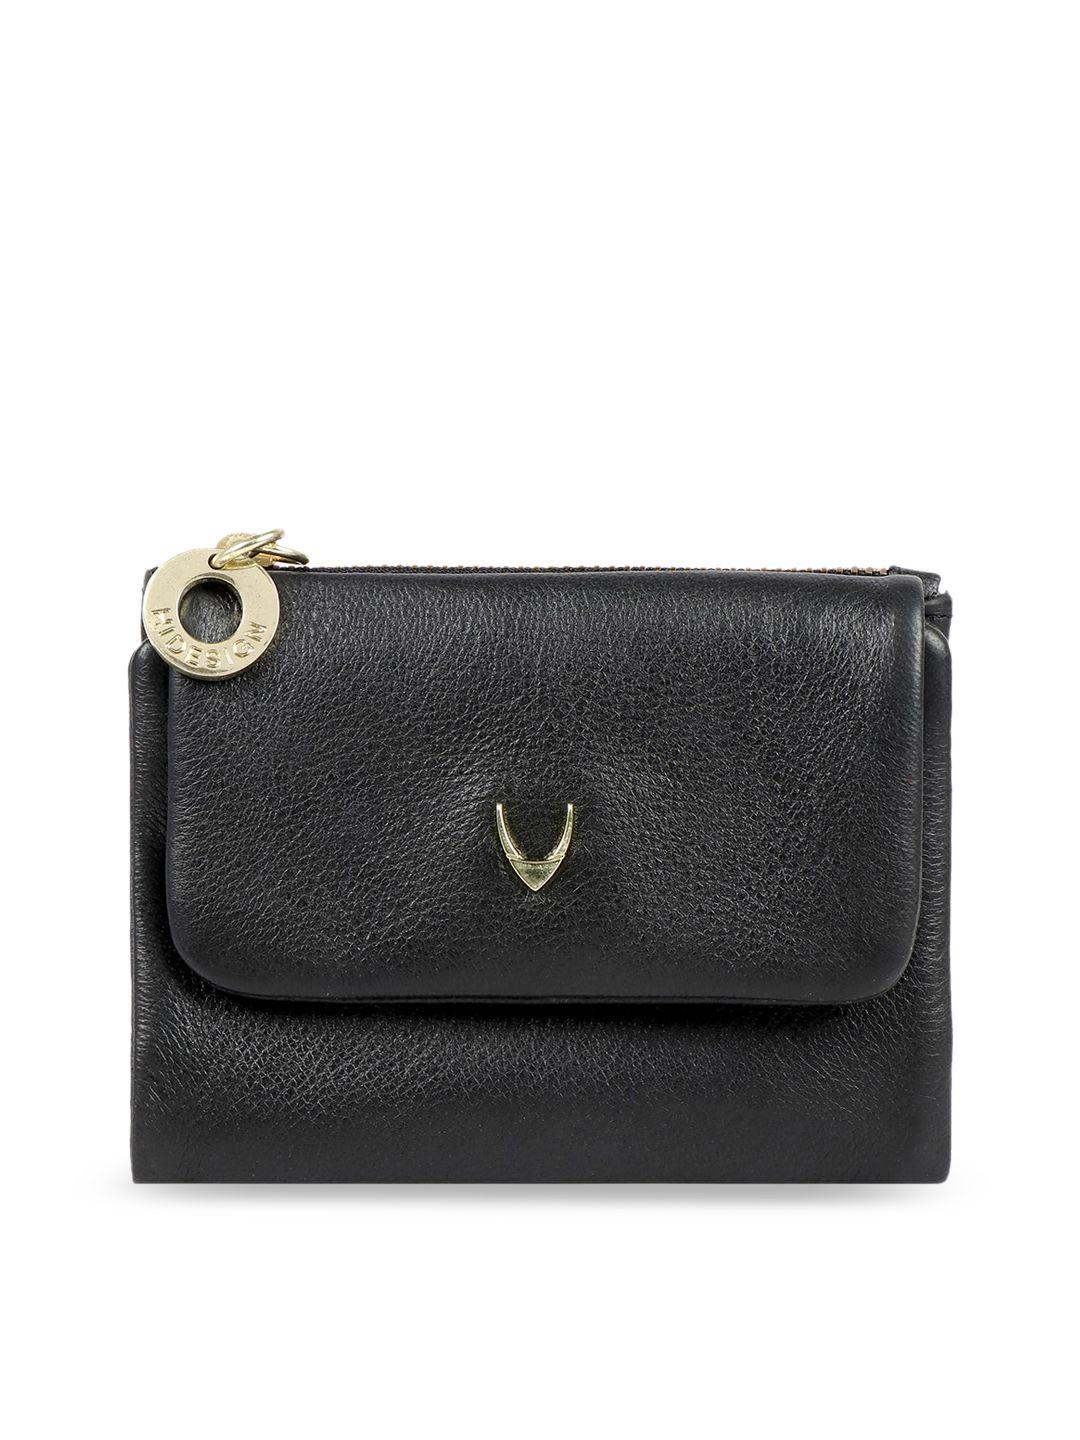 hidesign black solid leather envelope clutch